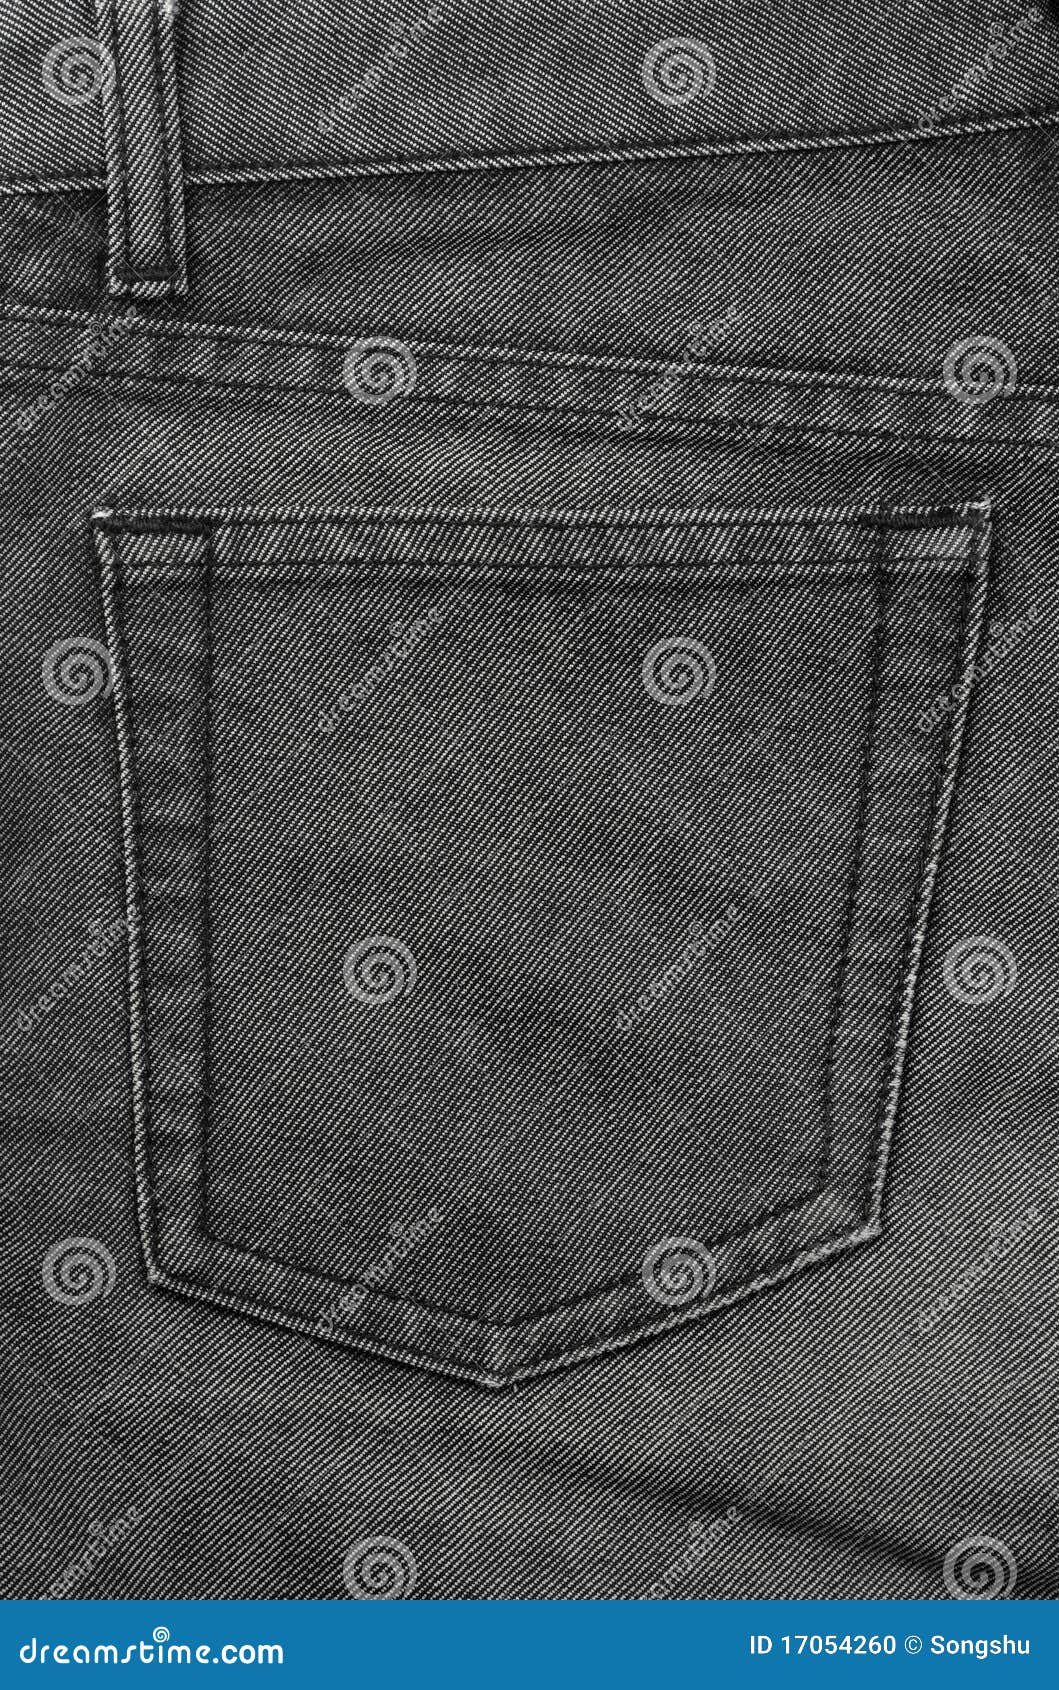 Back pocket stock photo. Image of thread, loop, black - 17054260